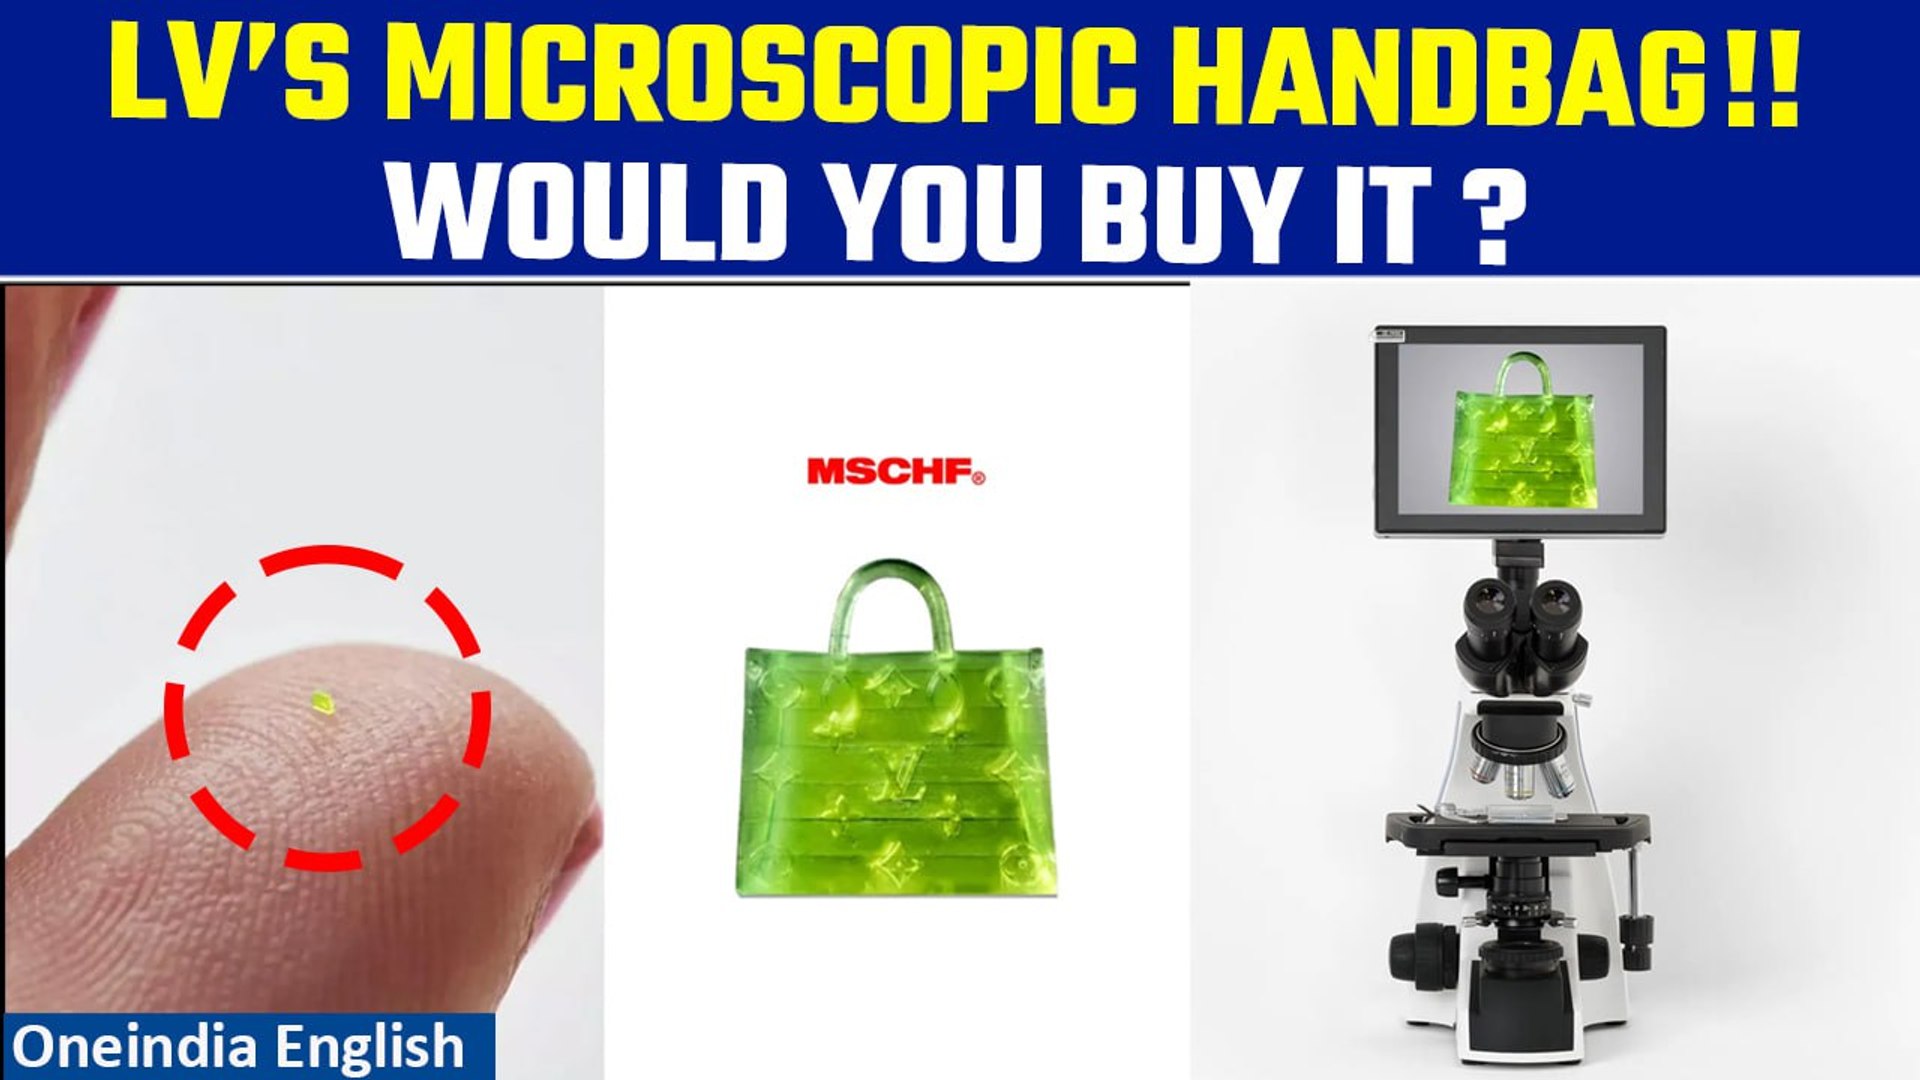 MSCHF's ultra tiny louis vuitton handbag is so small it needs a microscope